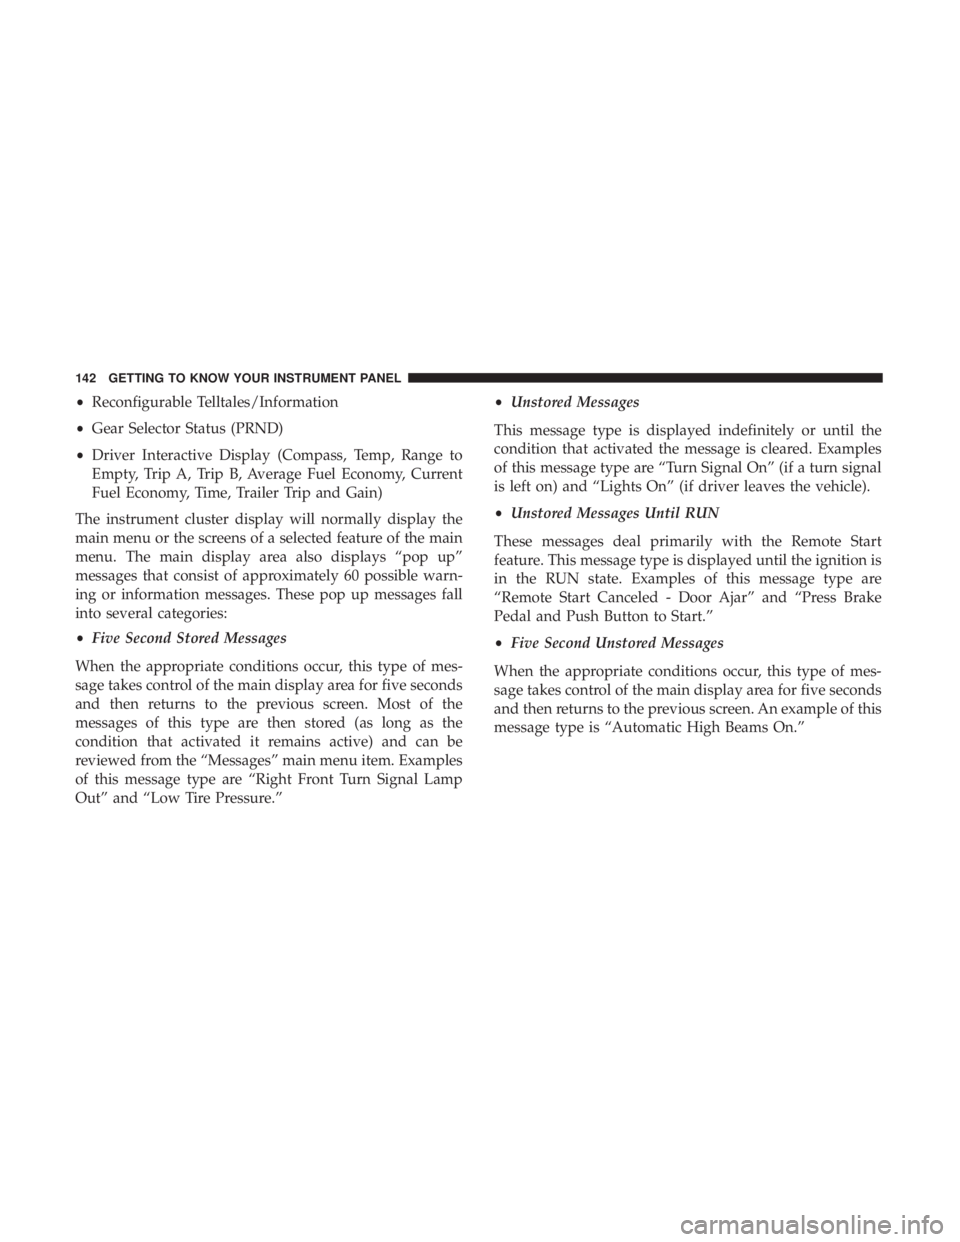 DODGE DURANGO SRT 2019  Owners Manual •Reconfigurable Telltales/Information
• Gear Selector Status (PRND)
• Driver Interactive Display (Compass, Temp, Range to
Empty, Trip A, Trip B, Average Fuel Economy, Current
Fuel Economy, Time,